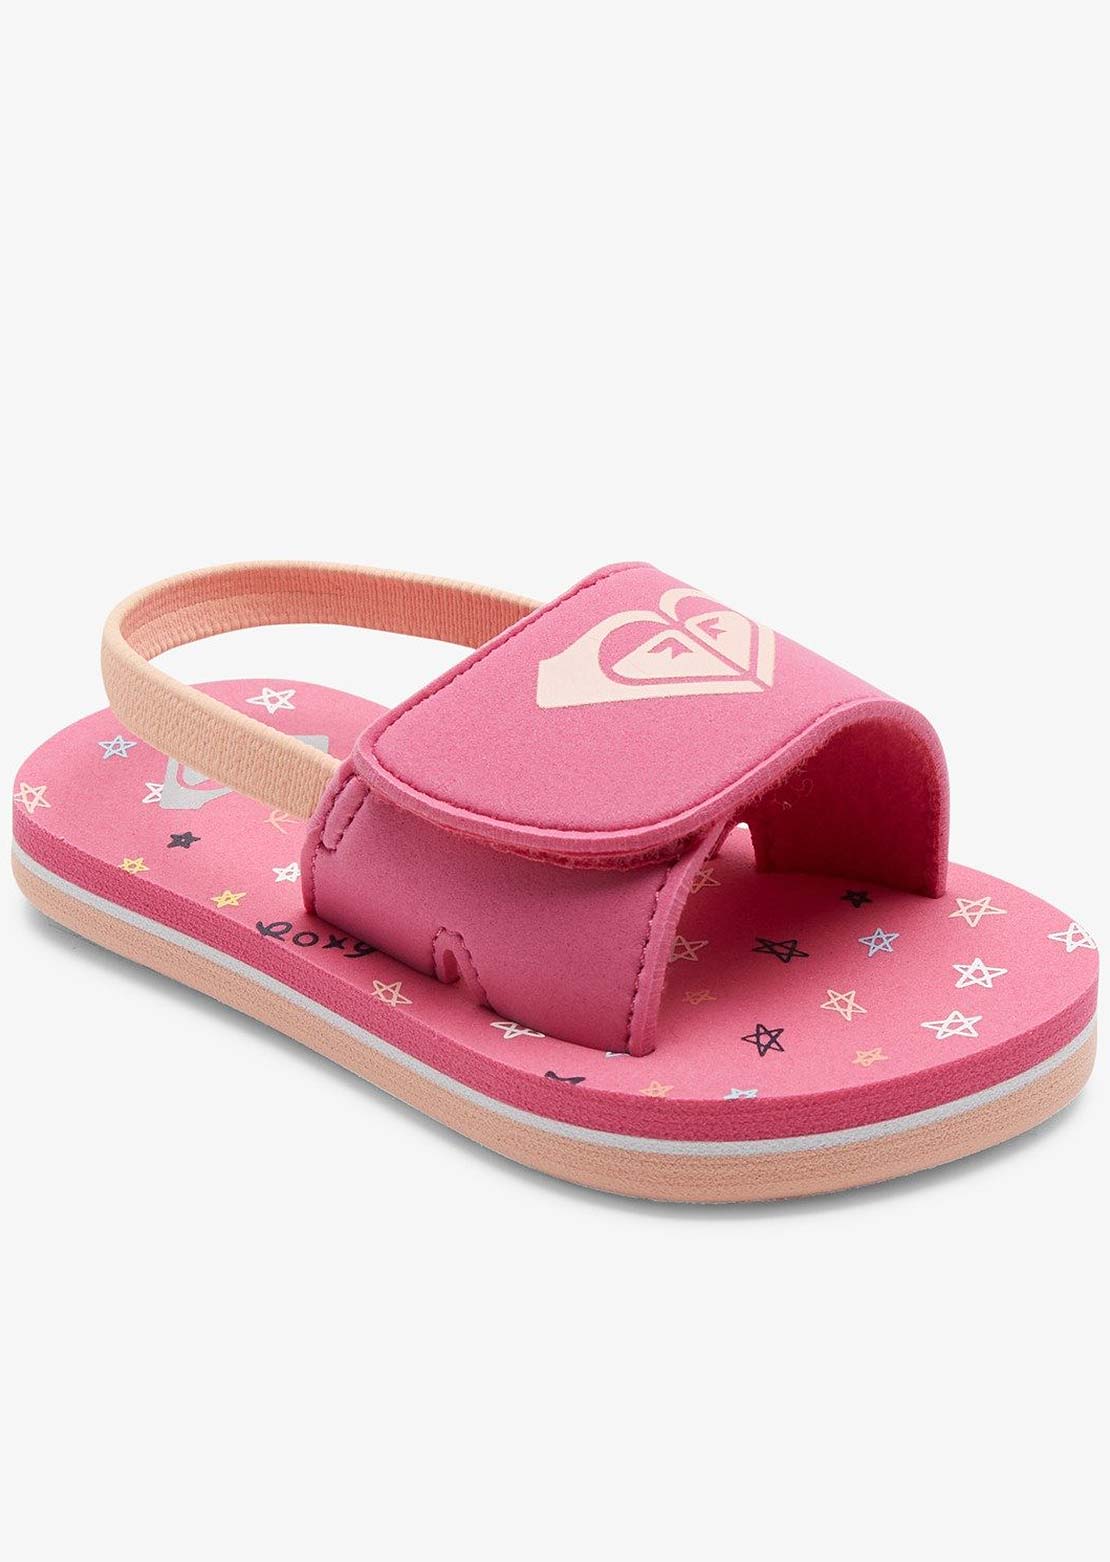 Roxy Junior Textile Webbing Finn Sandals Bright Rose/Pink Carnation